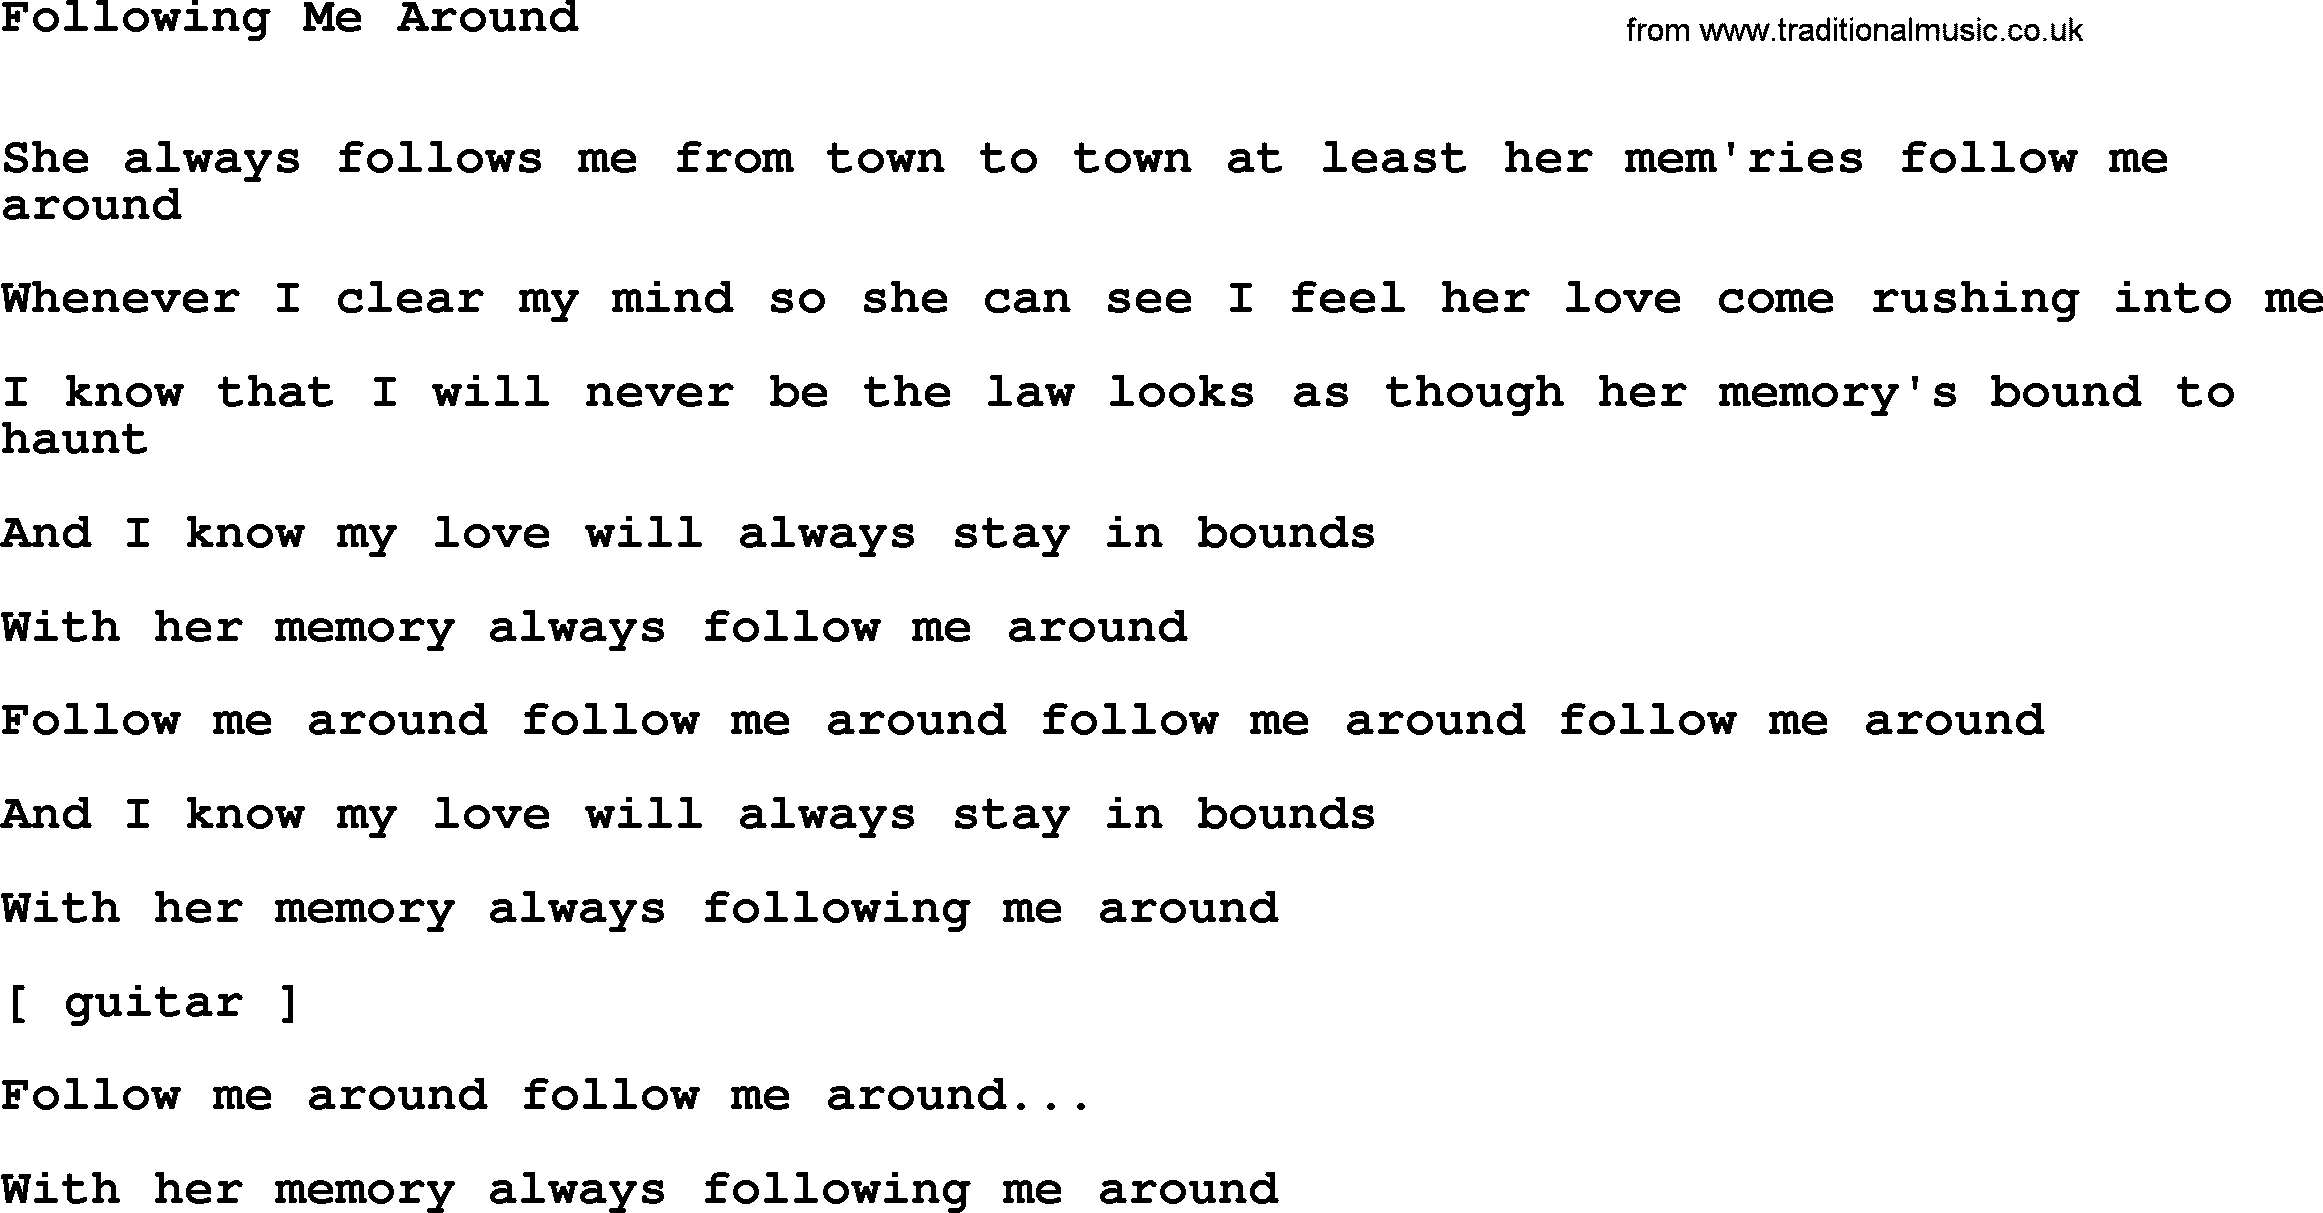 Willie Nelson song: Following Me Around lyrics